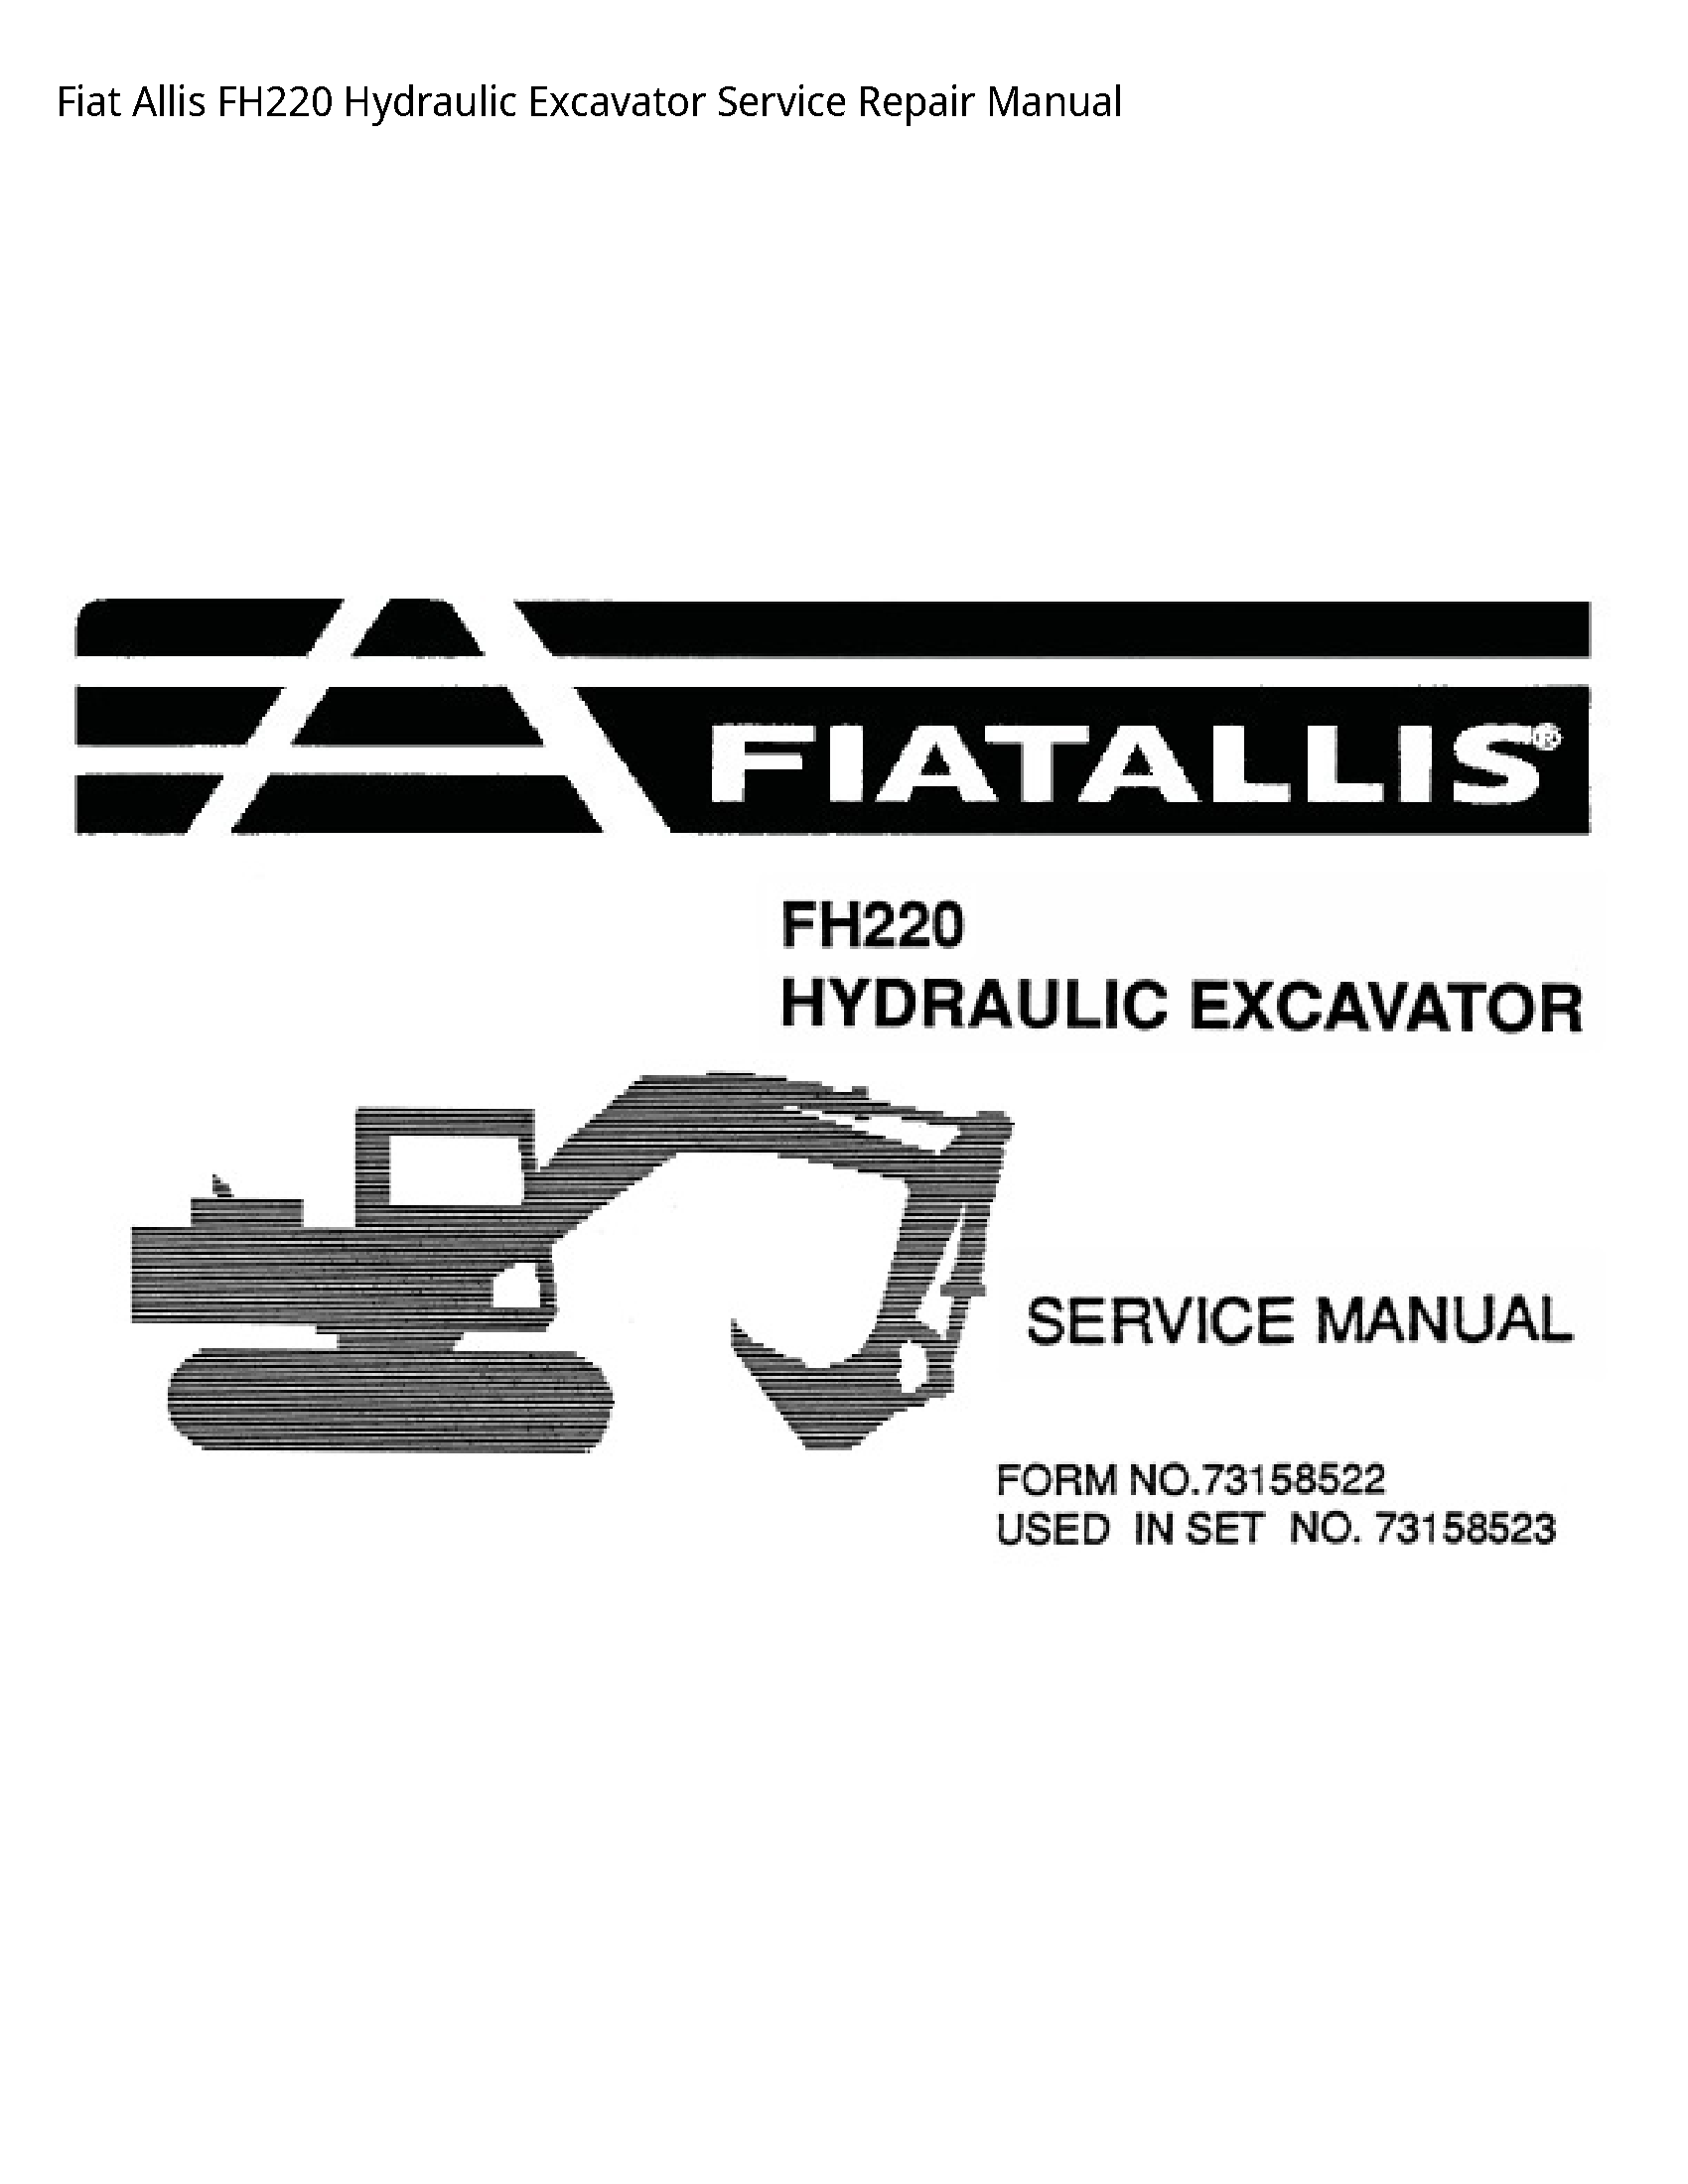 Fiat Allis FH220 Hydraulic Excavator manual